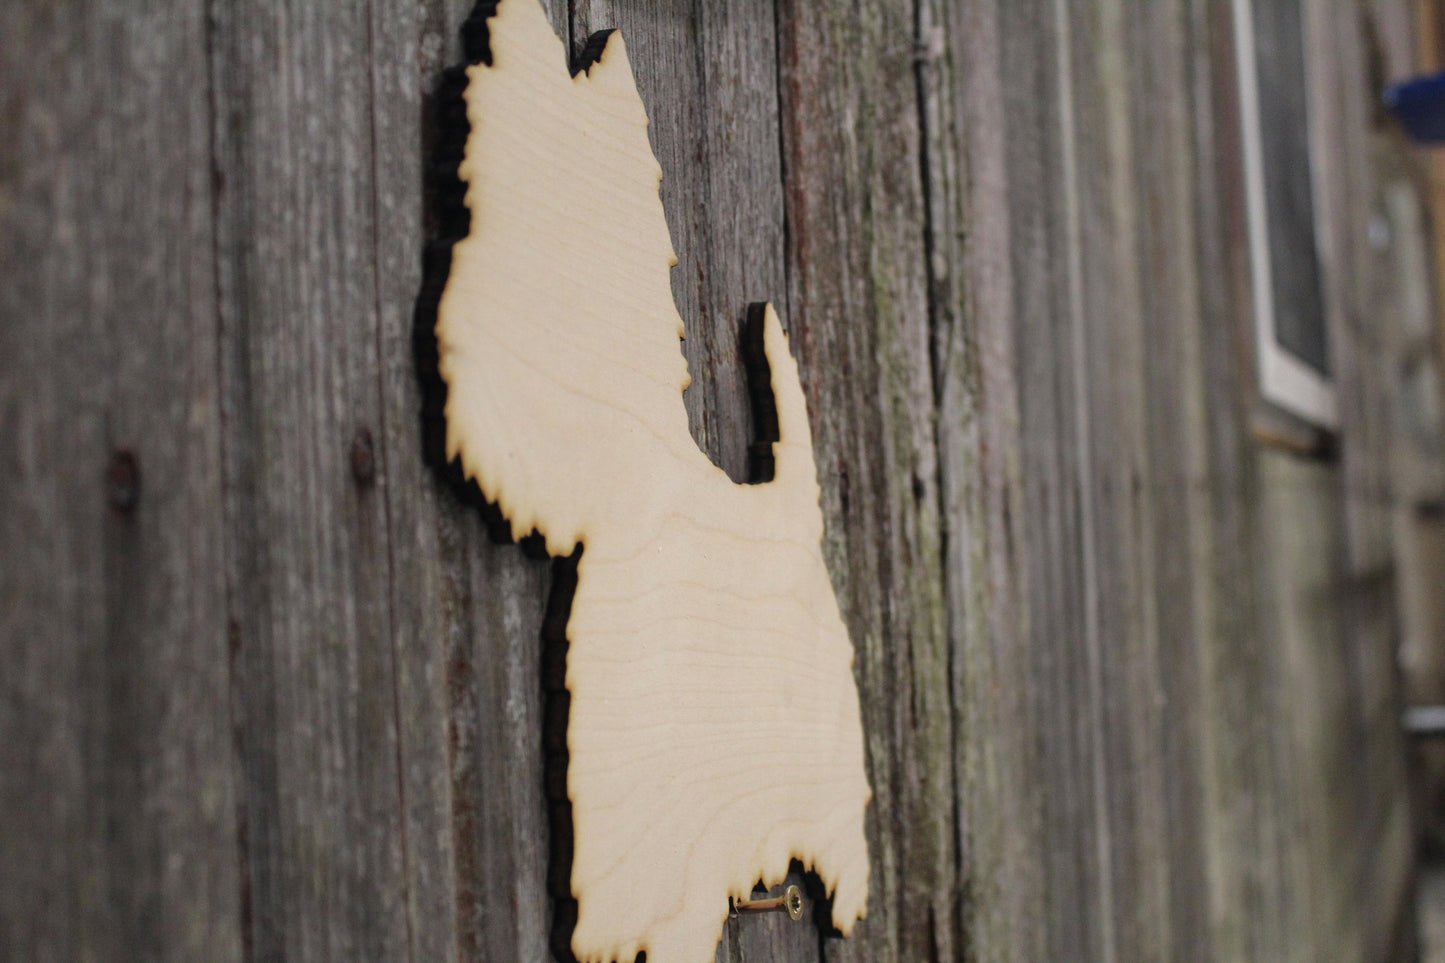 Westie Westland Terrier Dog Cutout DIY Wood Silhouette  Laser Cut Wooden Decor Image Wreath Birch Decoration Natural